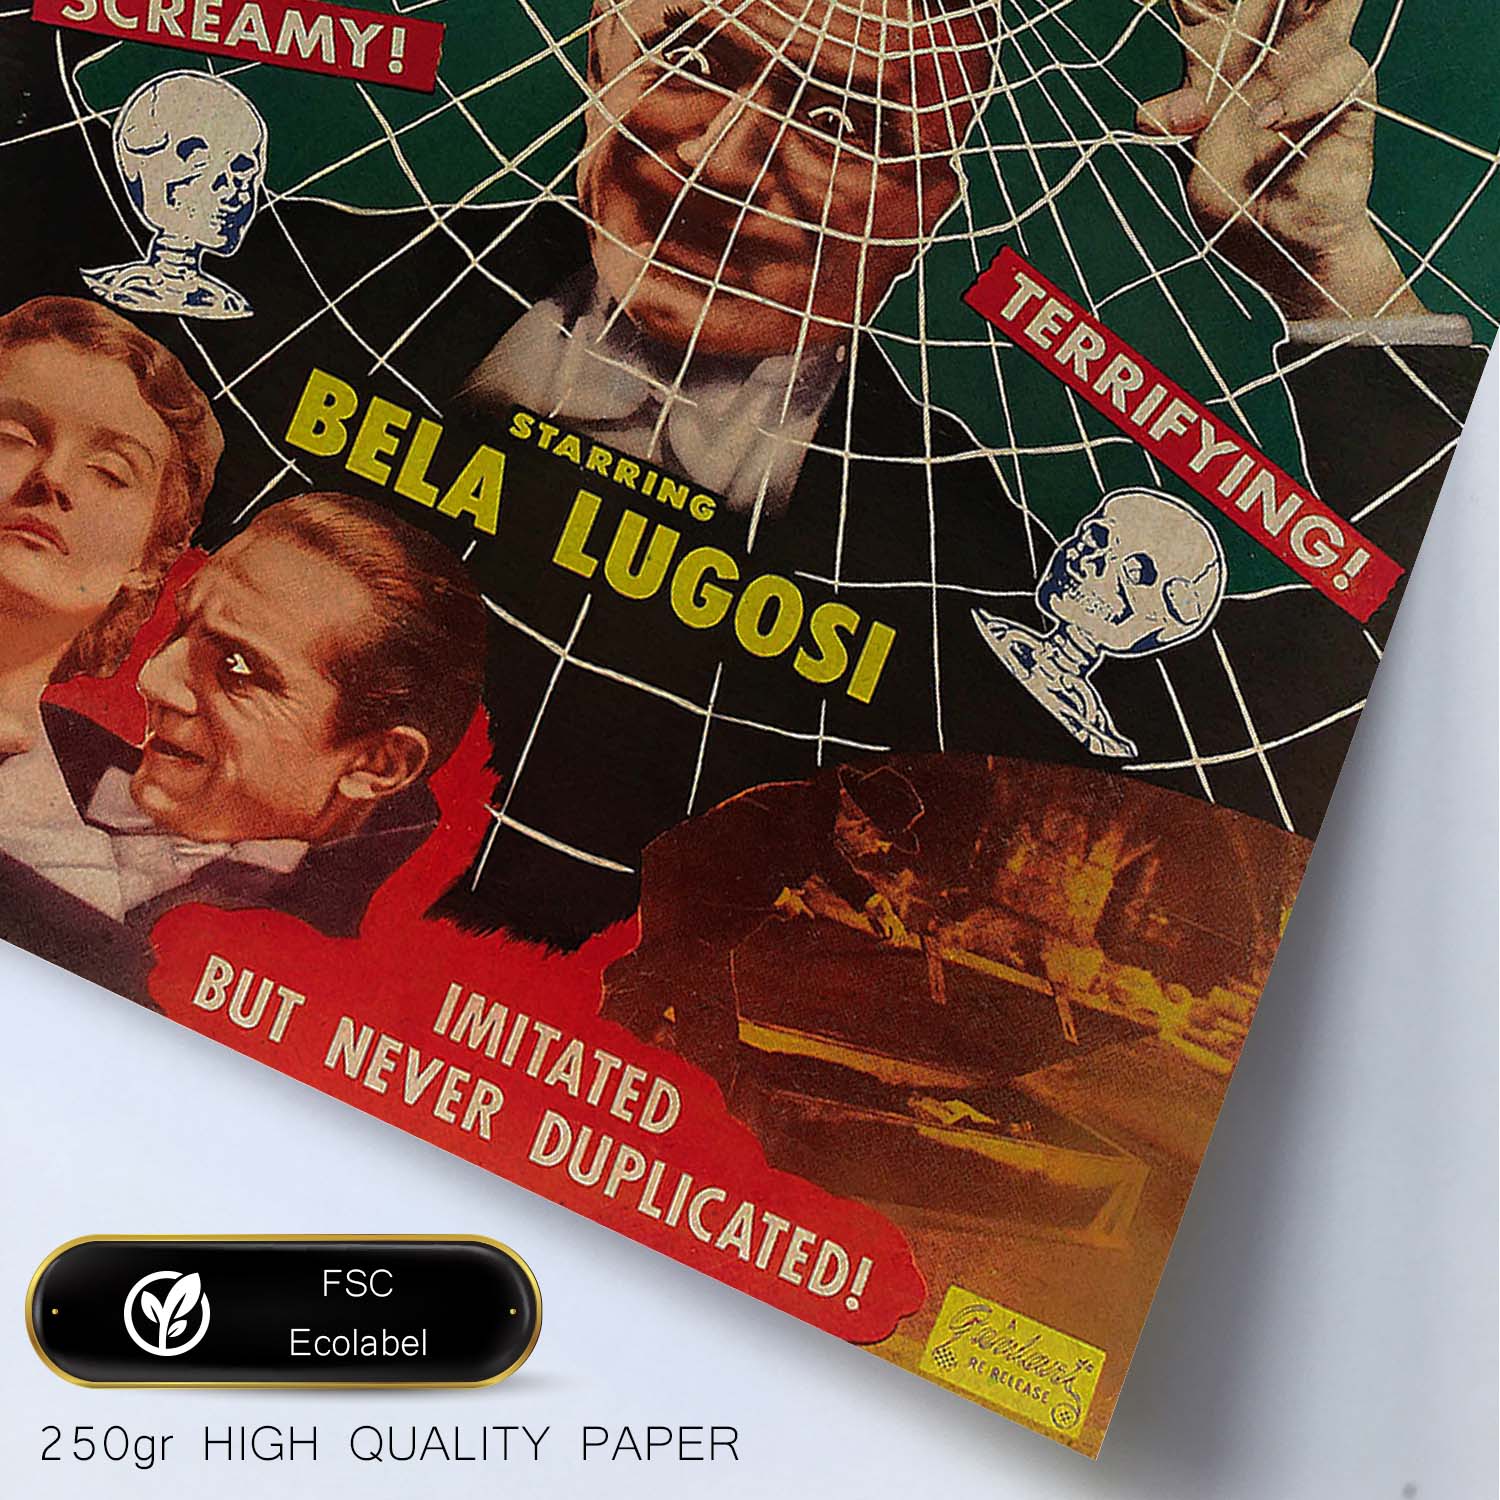 Poster vintage. Cartel cine vintage "Dracula".-Artwork-Nacnic-Nacnic Estudio SL